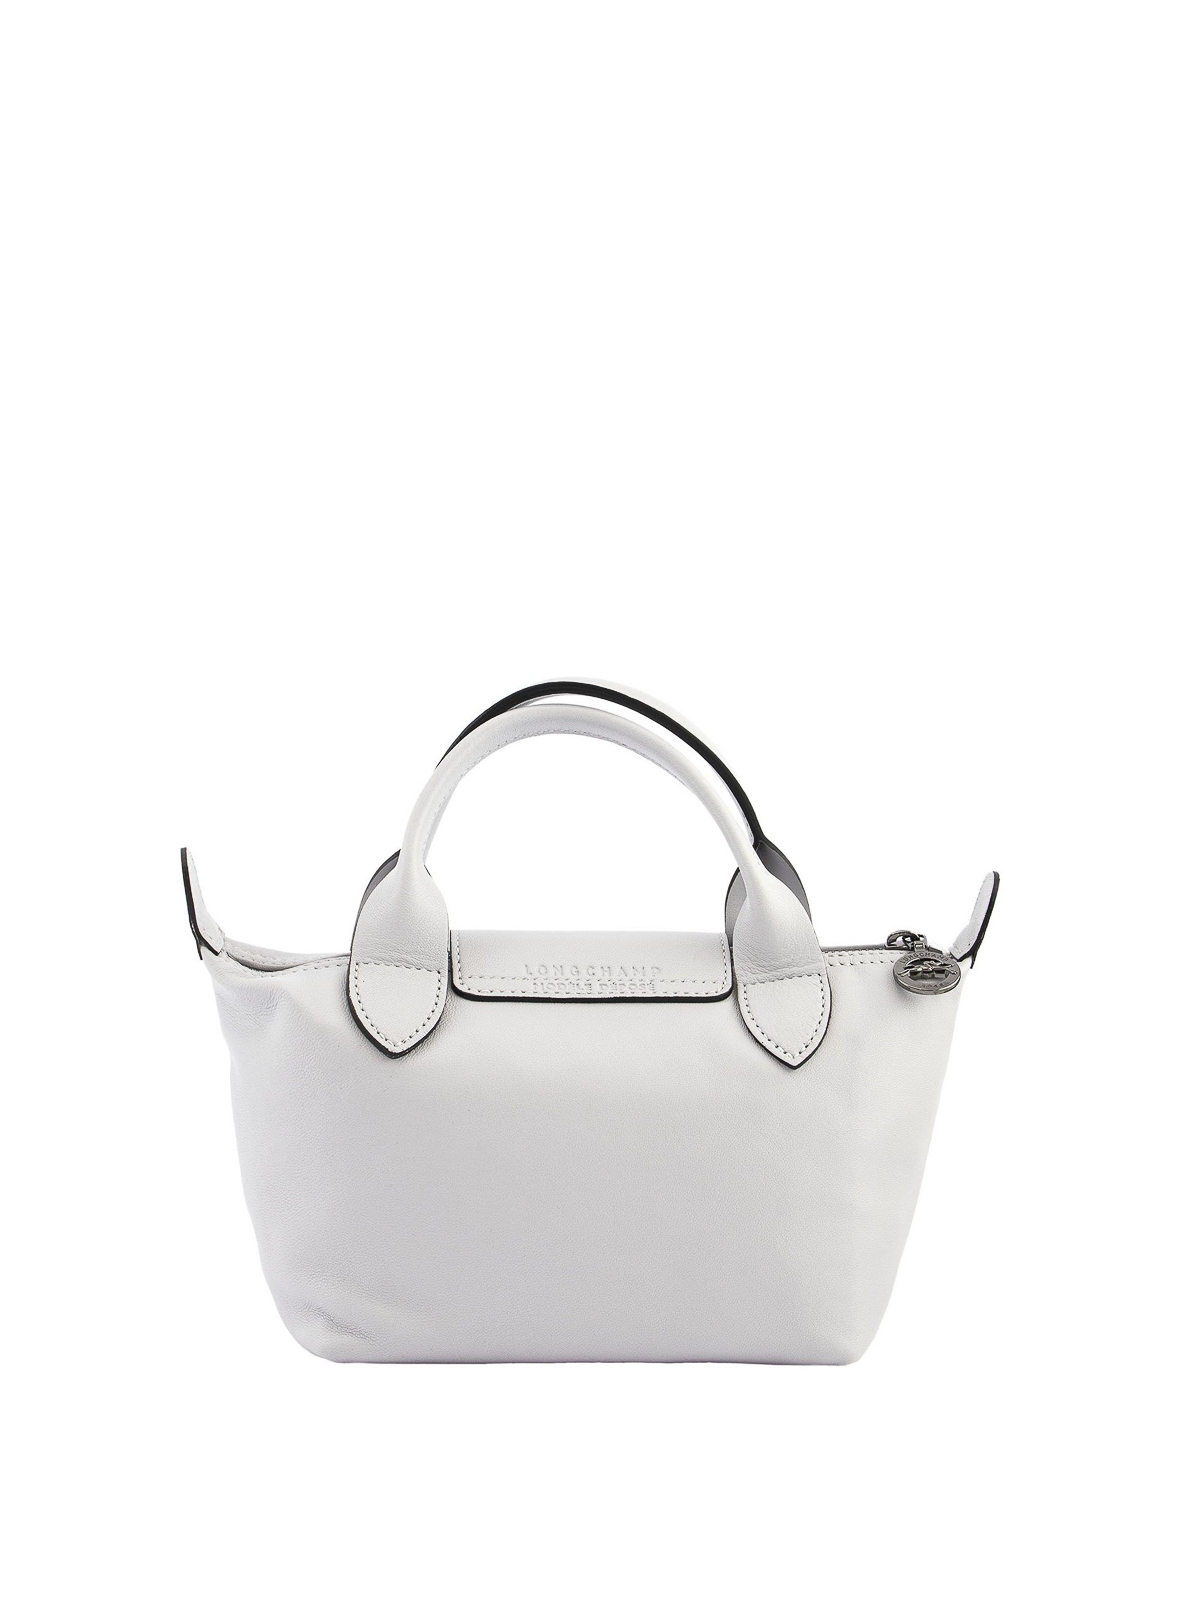 Longchamp : Pliage Cuir : Handbags :  : Handbags